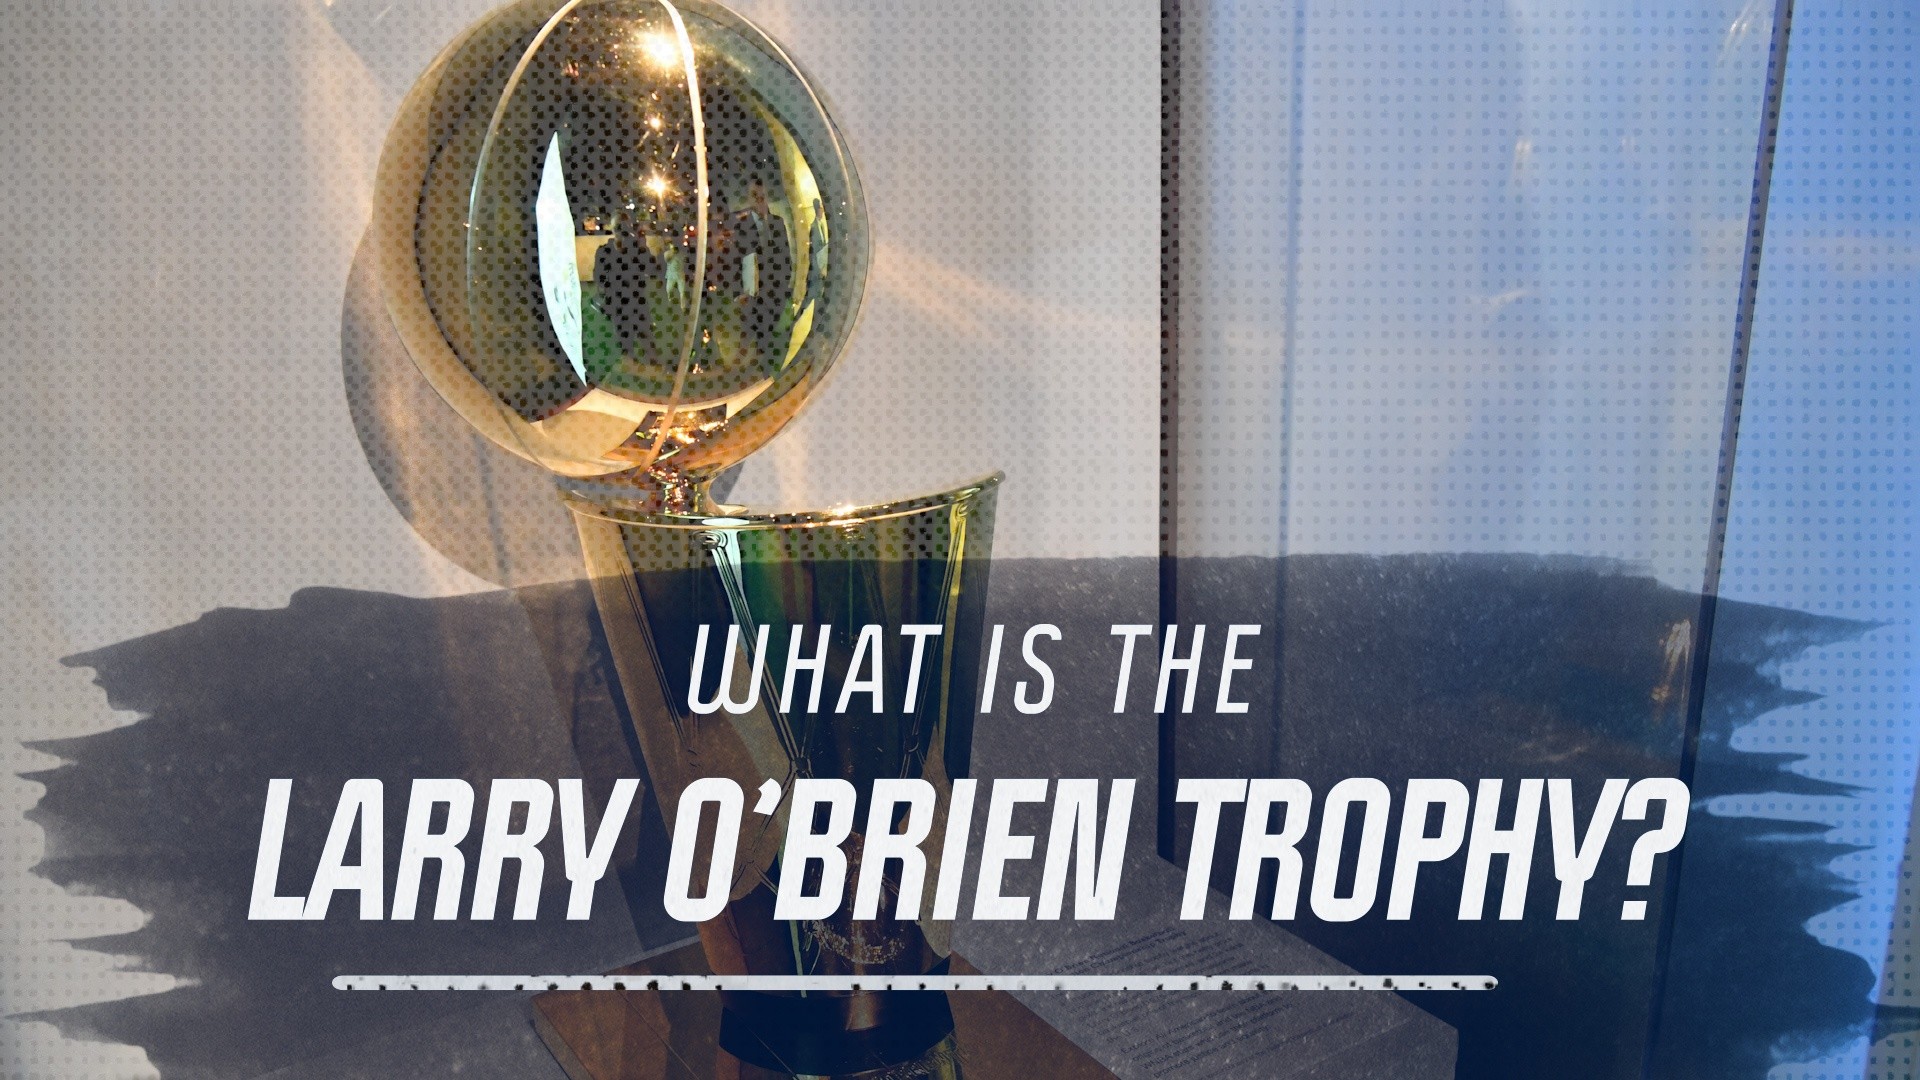 NBA Finals Larry O'Brien Championship Trophy 8 x 10 Color Photo!